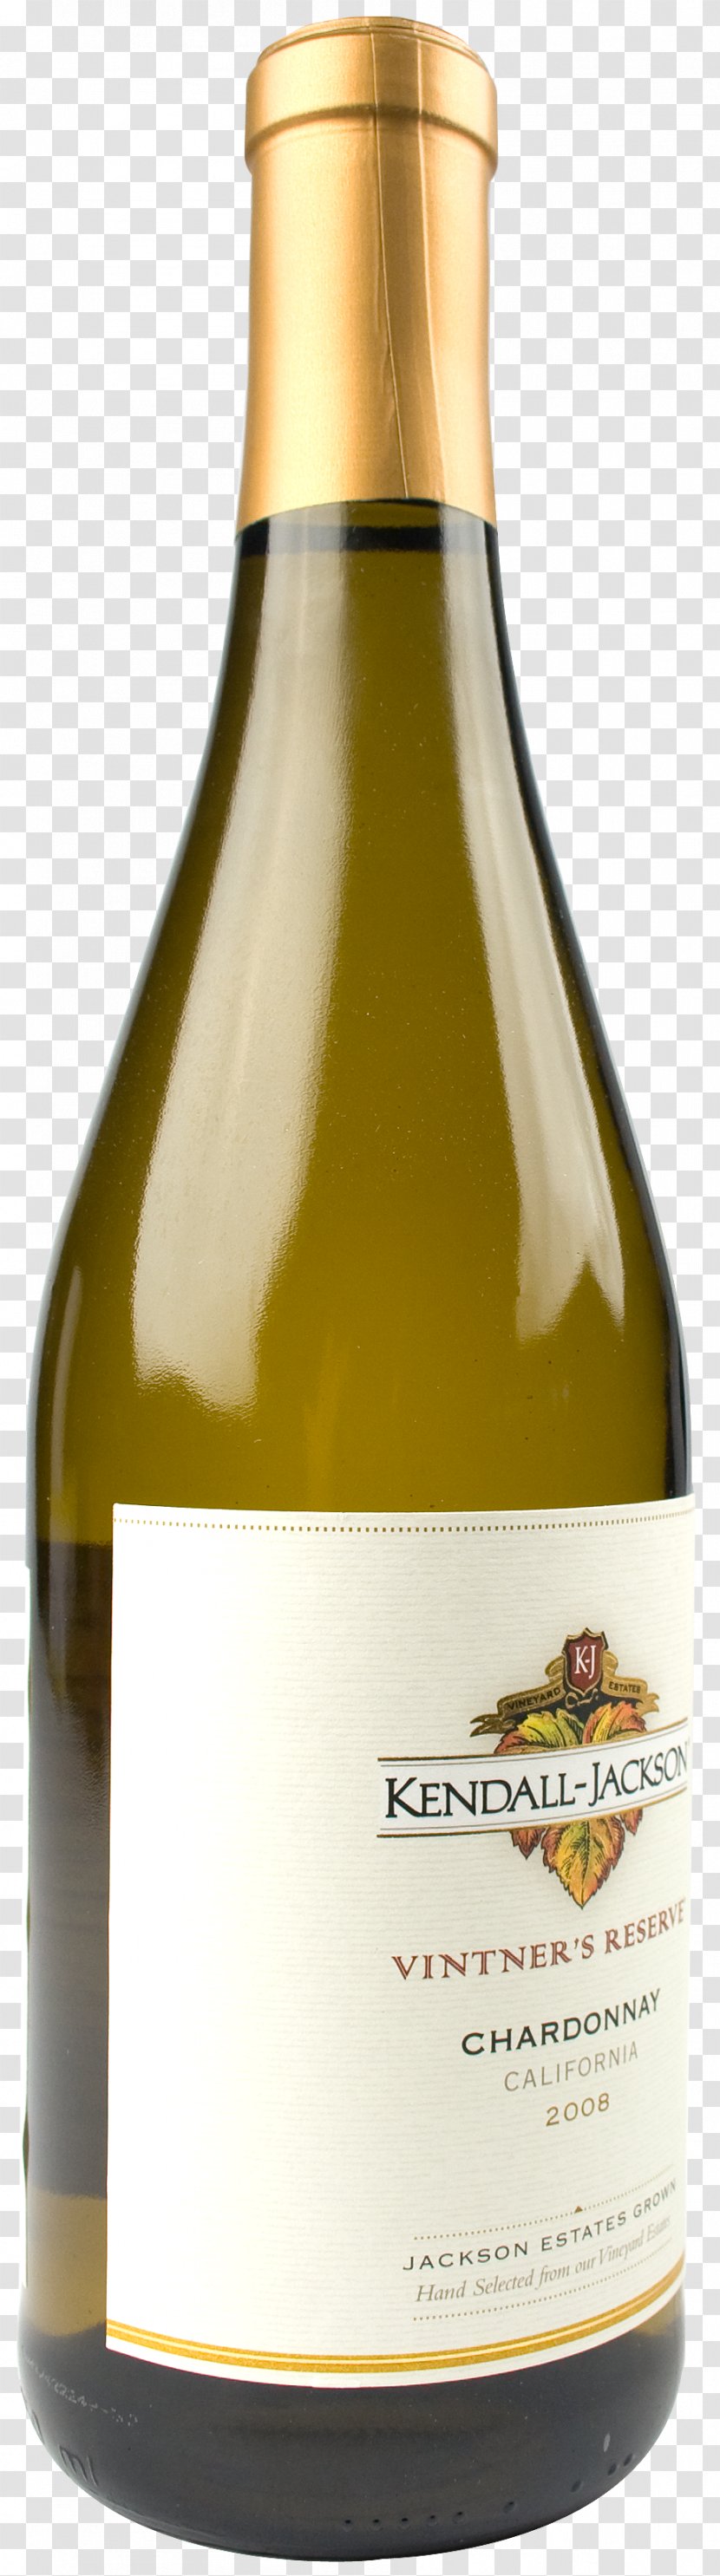 Riesling Chardonnay Wine Pinot Noir Kendall-Jackson Vineyard Estates - Bottle Transparent PNG